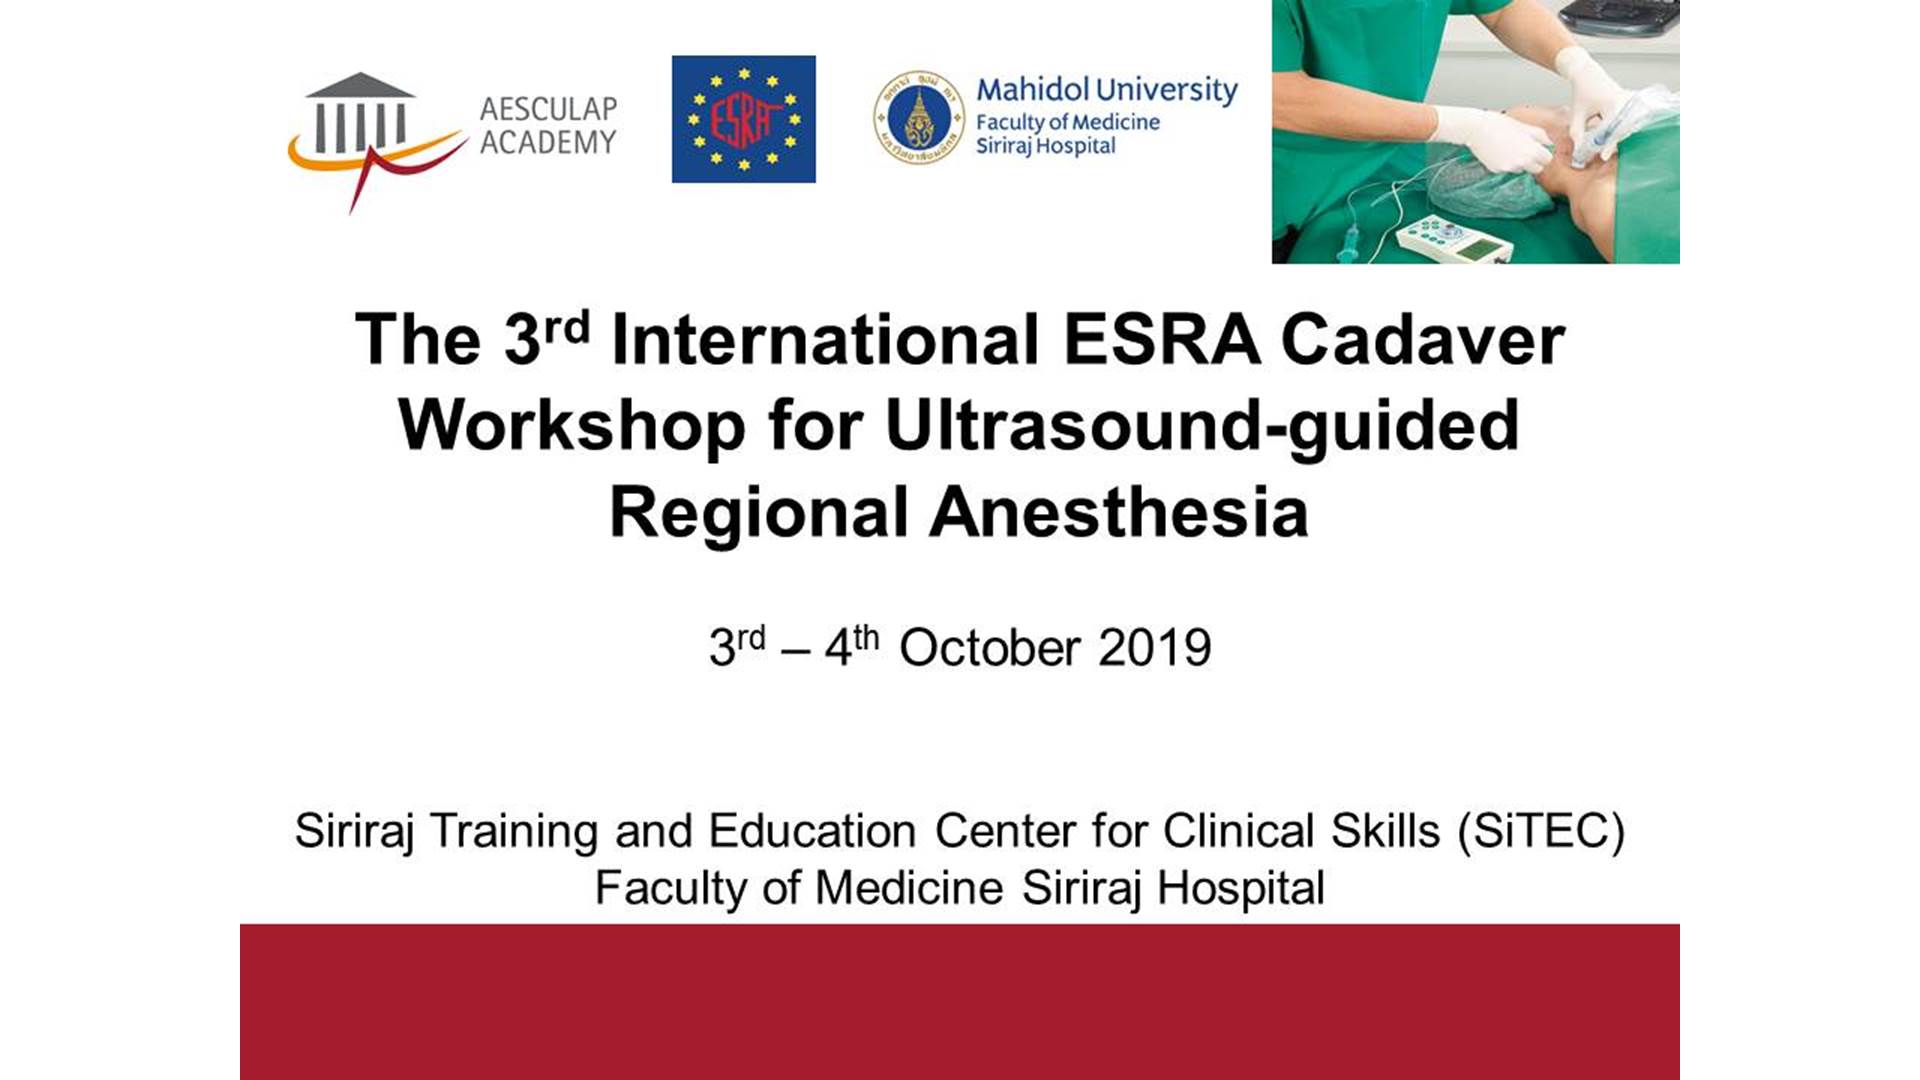 The 3rd International ESRA Cadaver Workshop for Ultrasound-Guided Regional Anesthesia